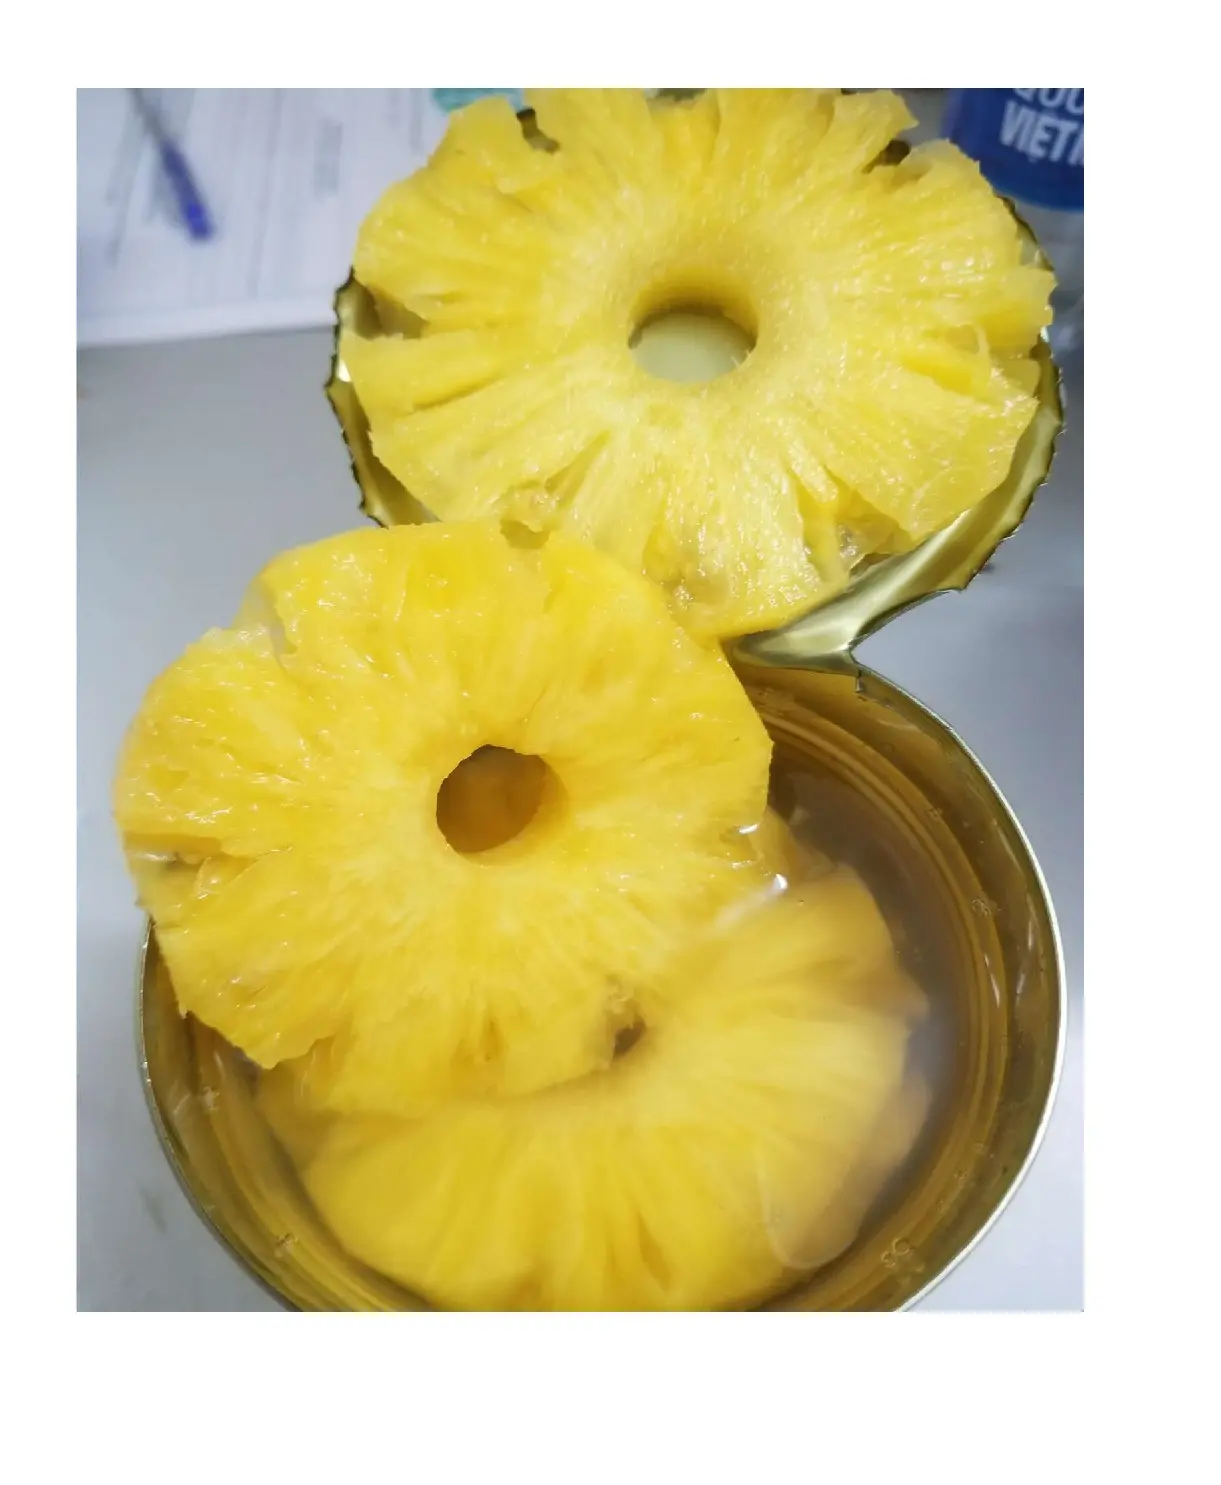 Süper ucuz fiyat konserve dilimlenmiş ananas//yüksek kaliteli konserve meyve ihracat VIETNAM//HENRY